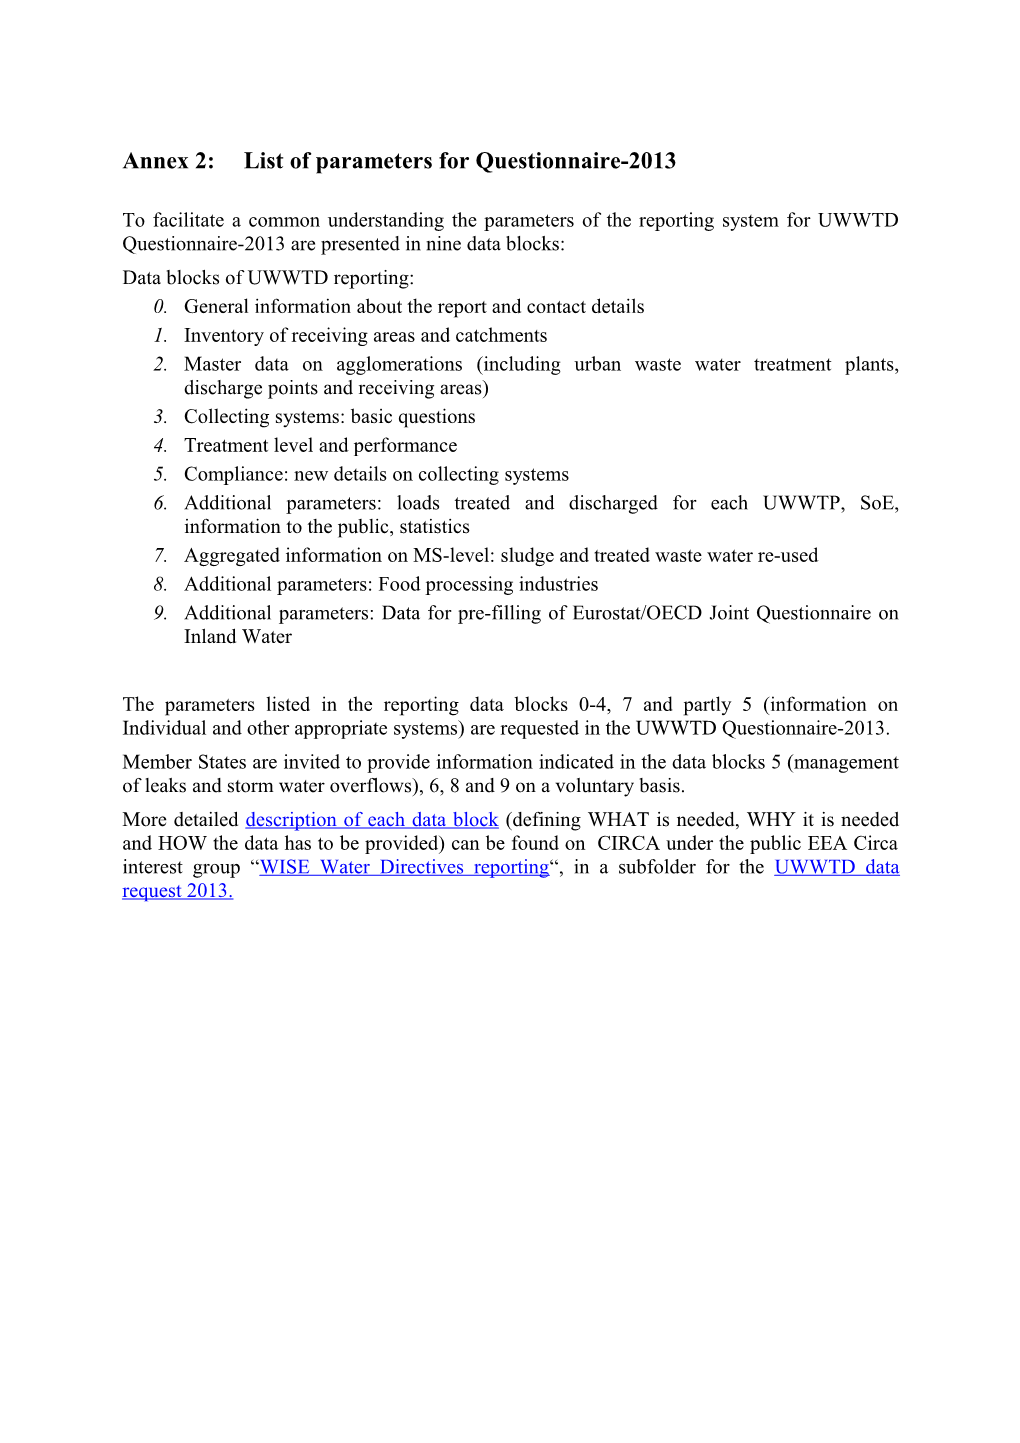 Annex 2:List of Parameters for Questionnaire-2013